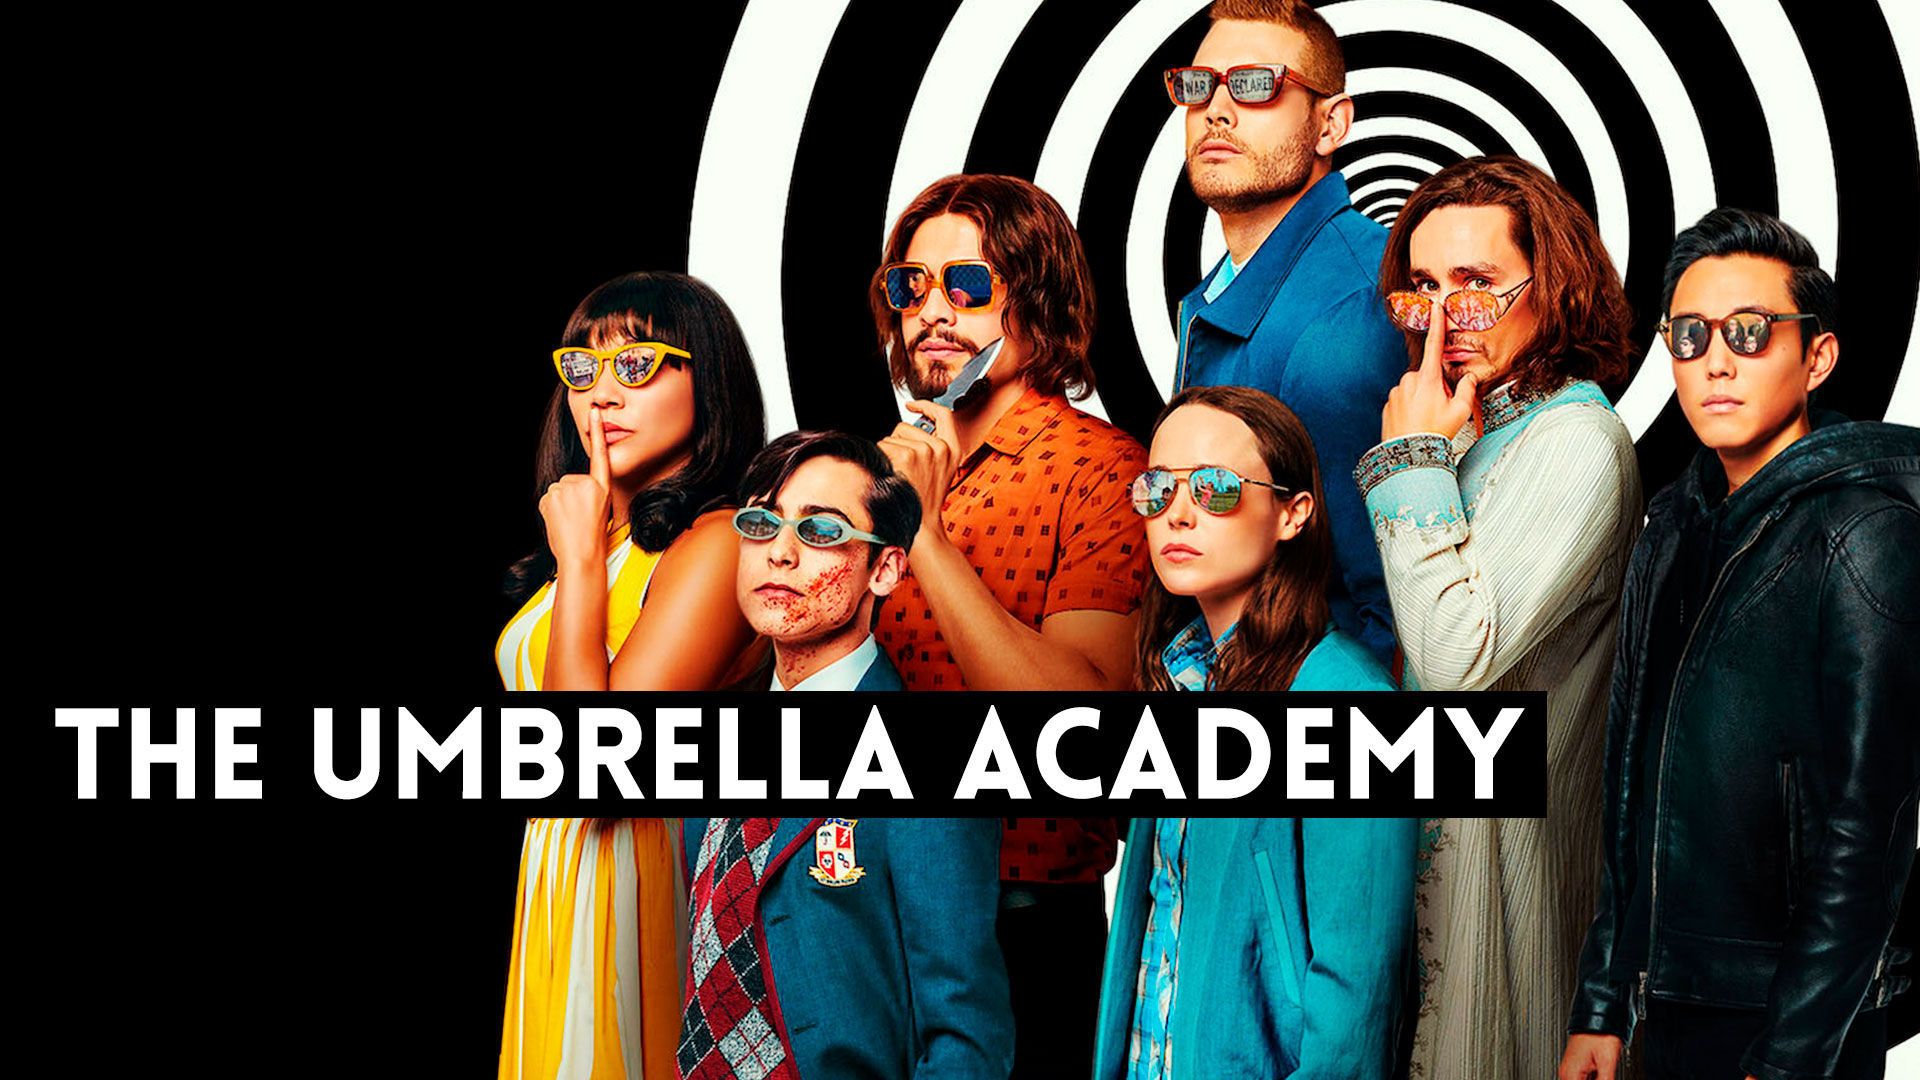 Ver The Umbrella Academy en español